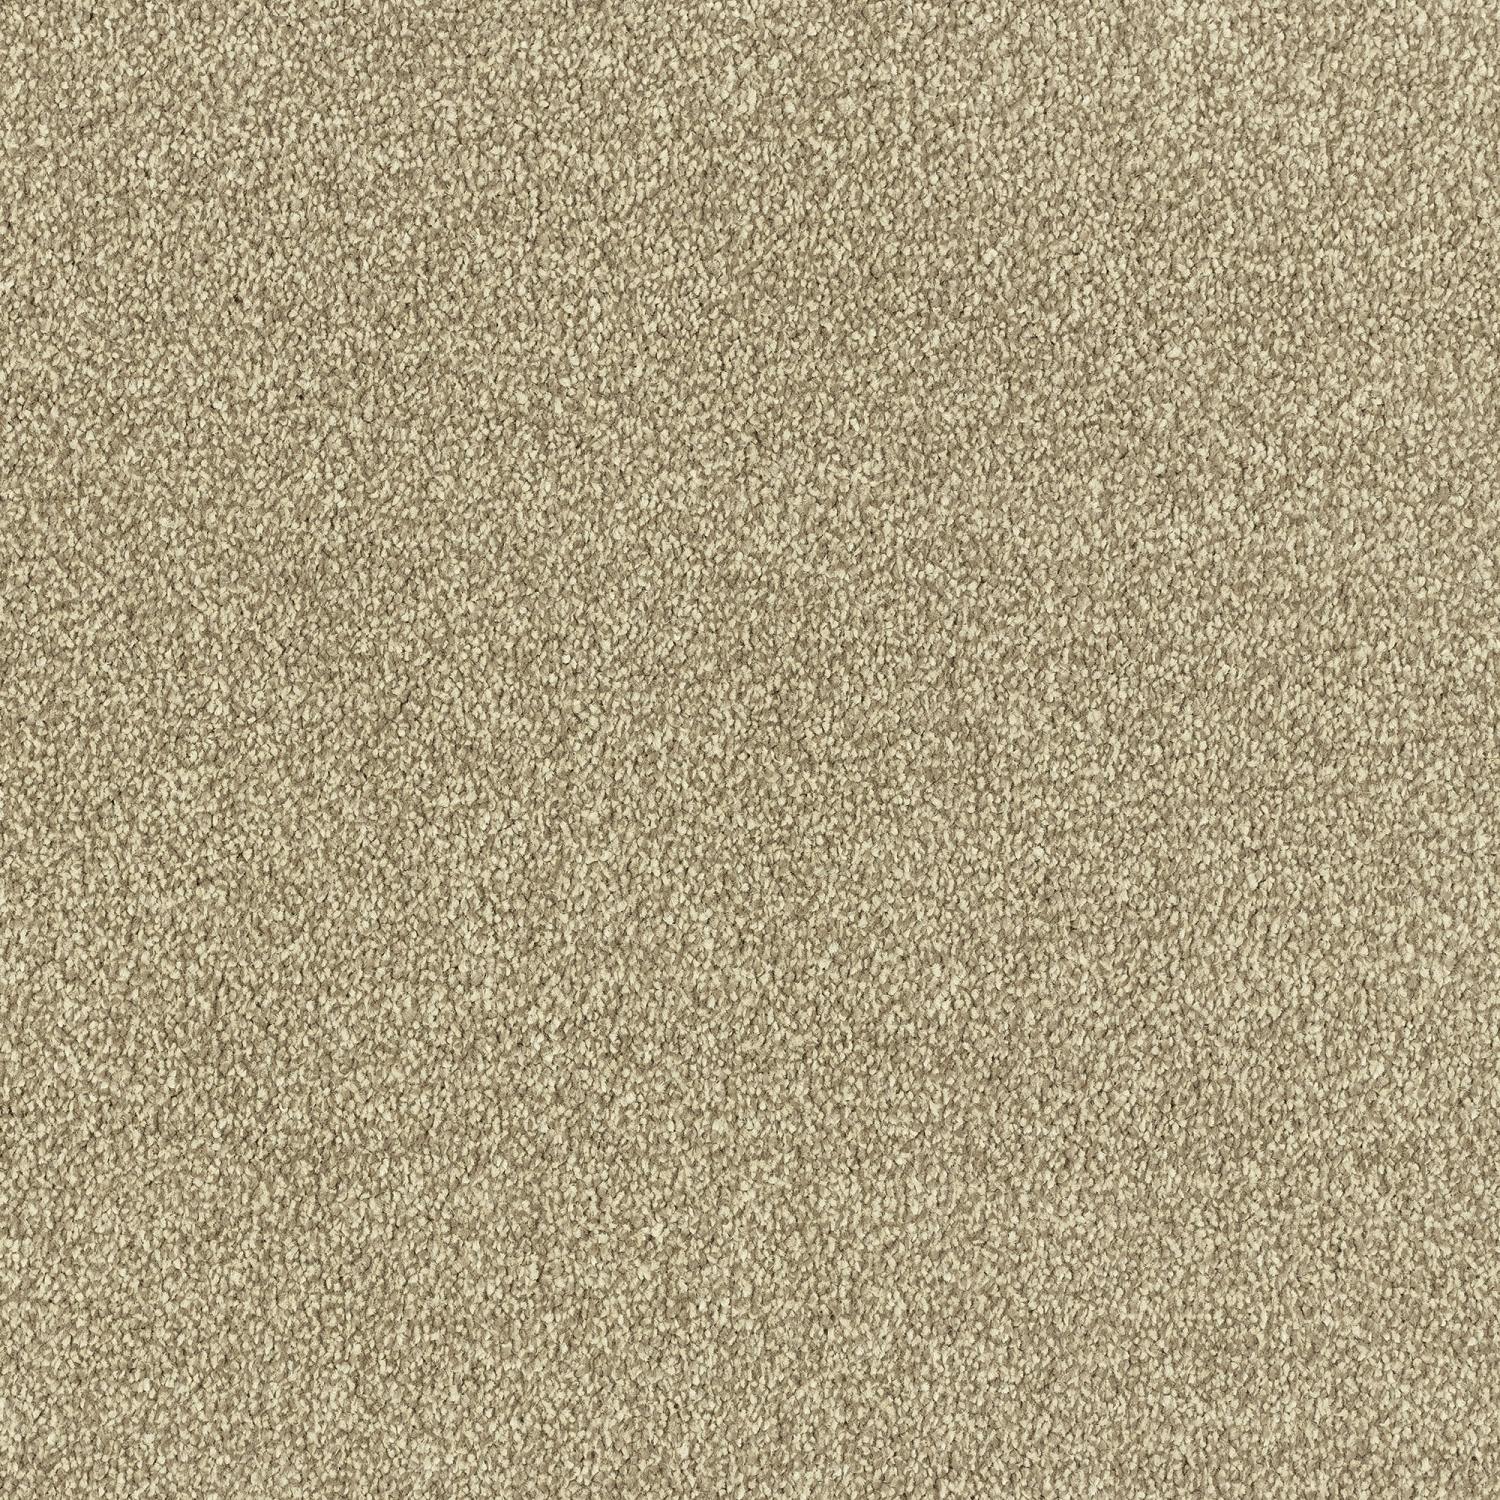 Stainfree Maximus Saxony Carpet - Biscotti